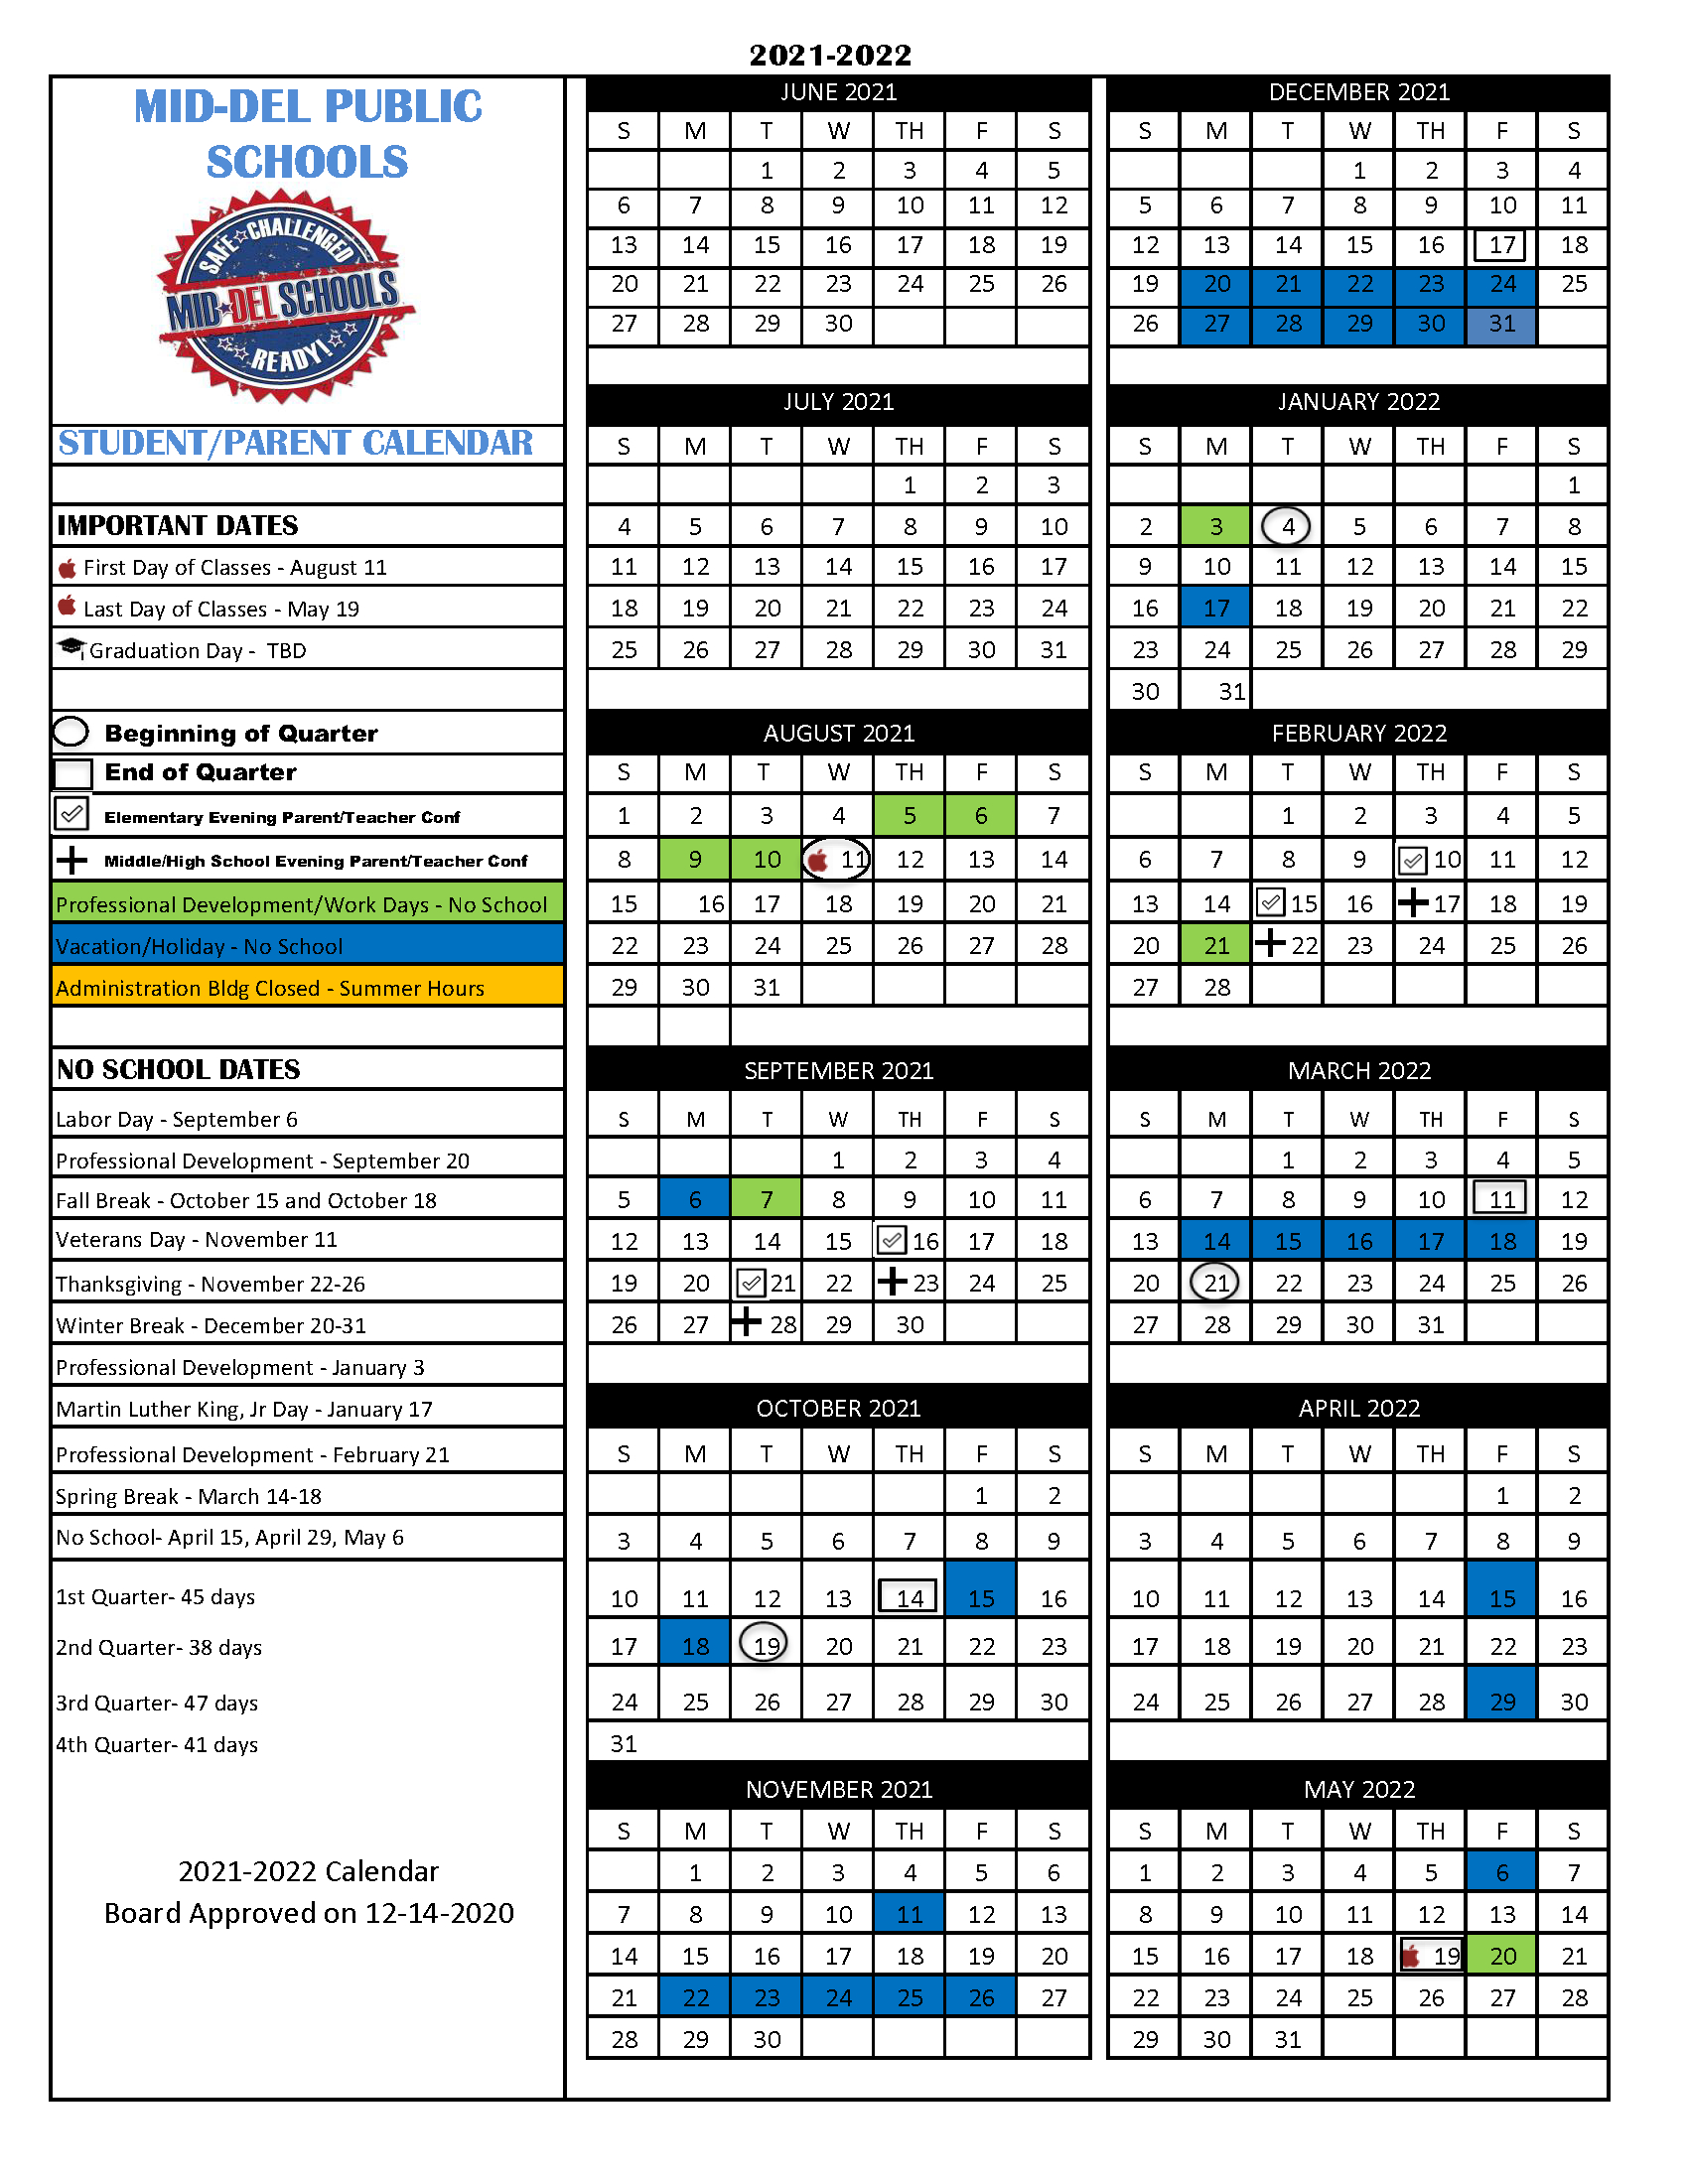 pasco-county-school-calendar-qualads-from-calendar-of-education-countycalendars